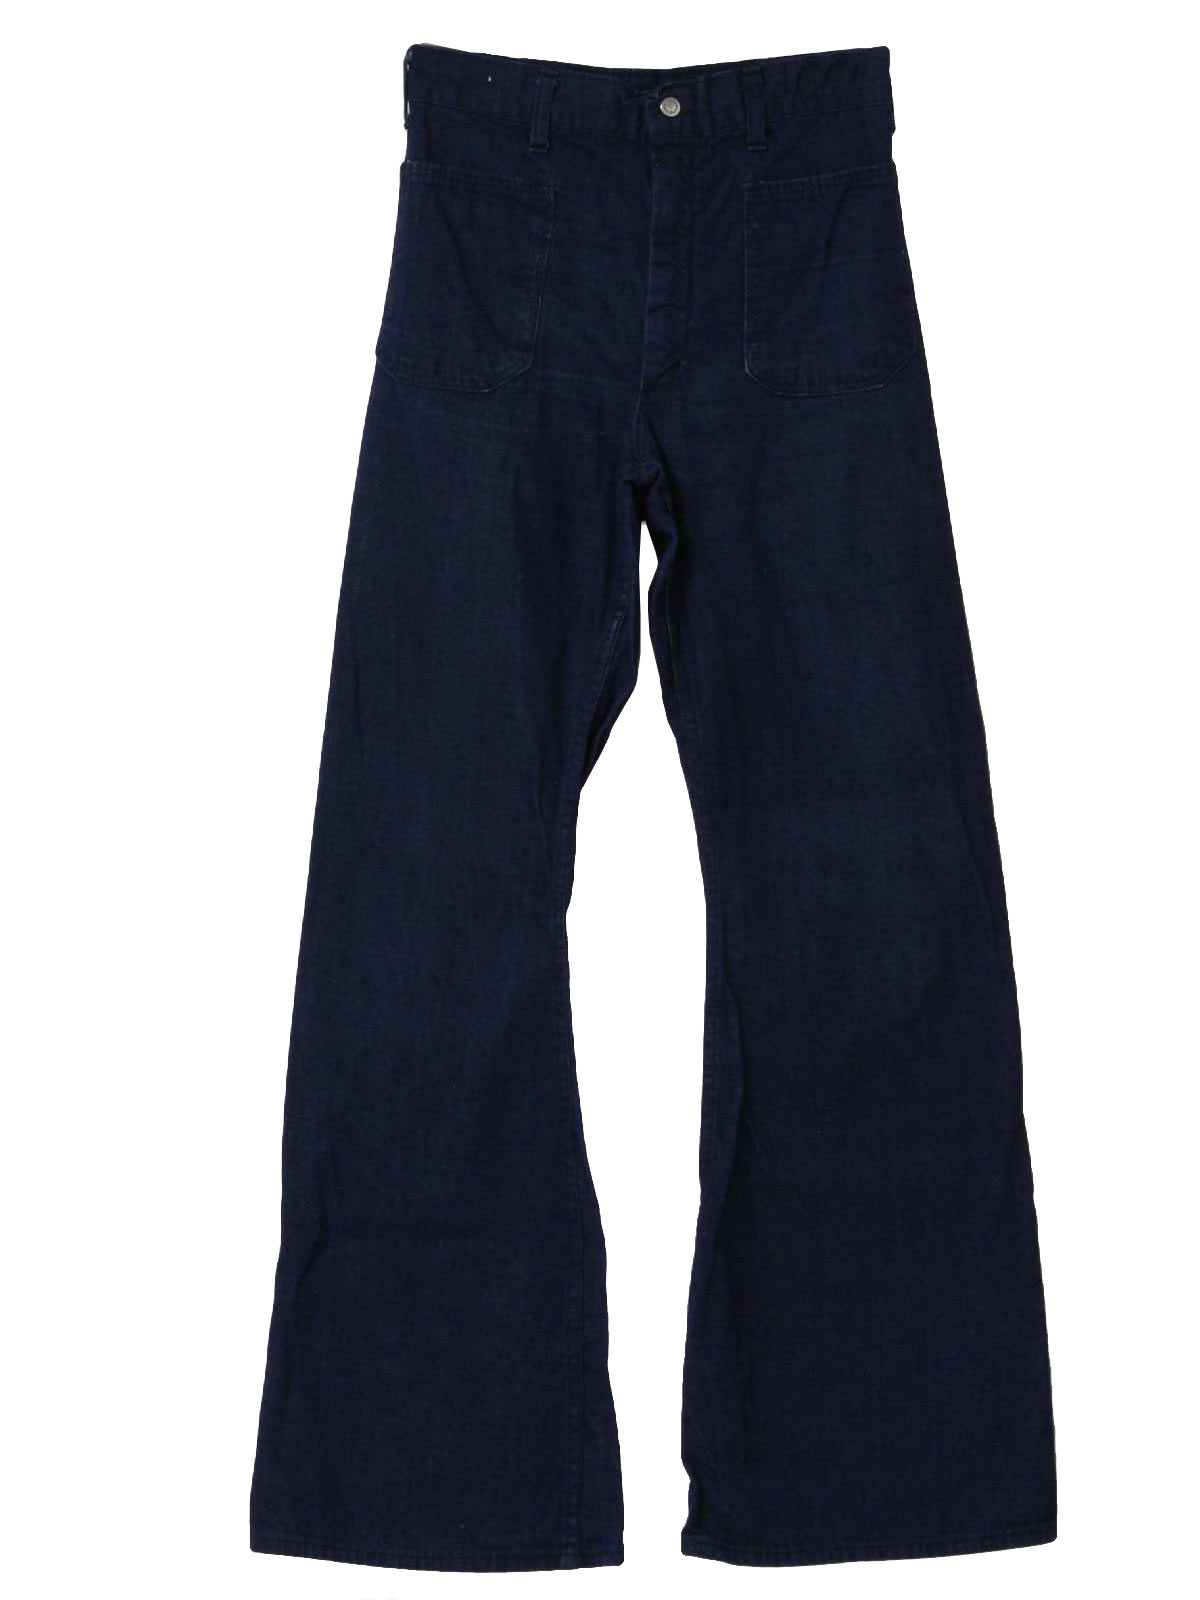 Retro 1970s Bellbottom Pants: 70s -Navdungaree- Mens blue cotton denim ...